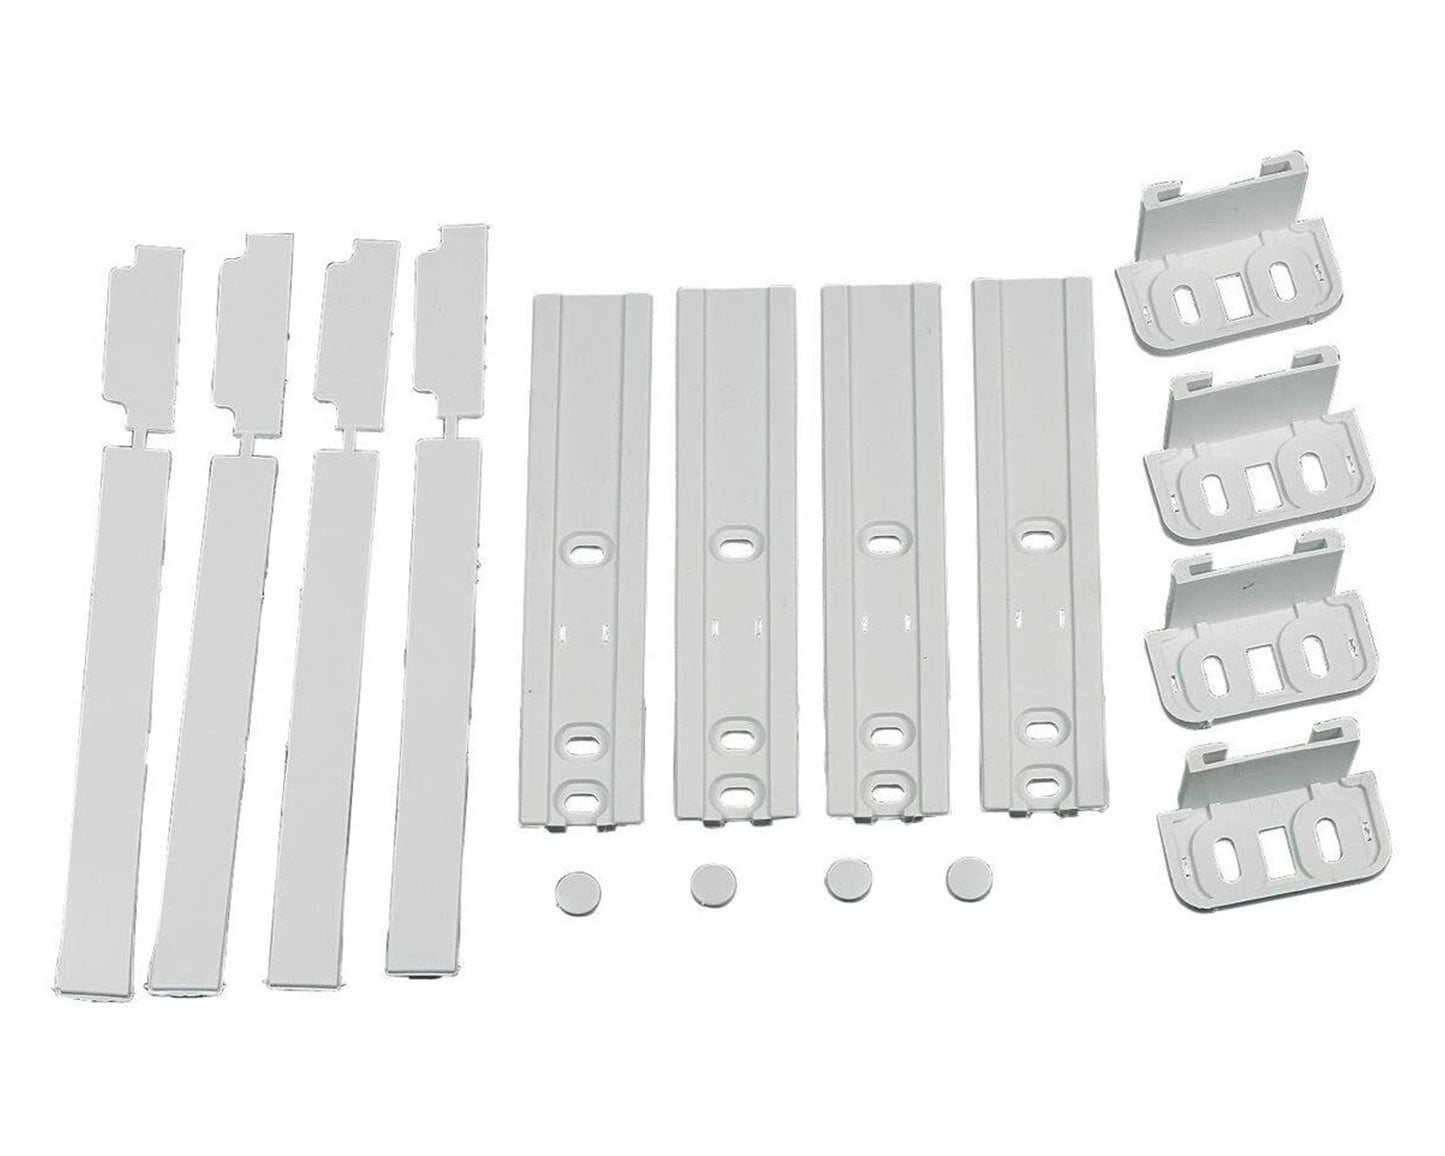 Genuine Fridge Freezer Integrated Door Hinge Fixing Slide Kit for Phillips AFB802, AMB571, AMB572, AMB9550, ARB504, ARB506, ARB518, ARB518/01, ARB528